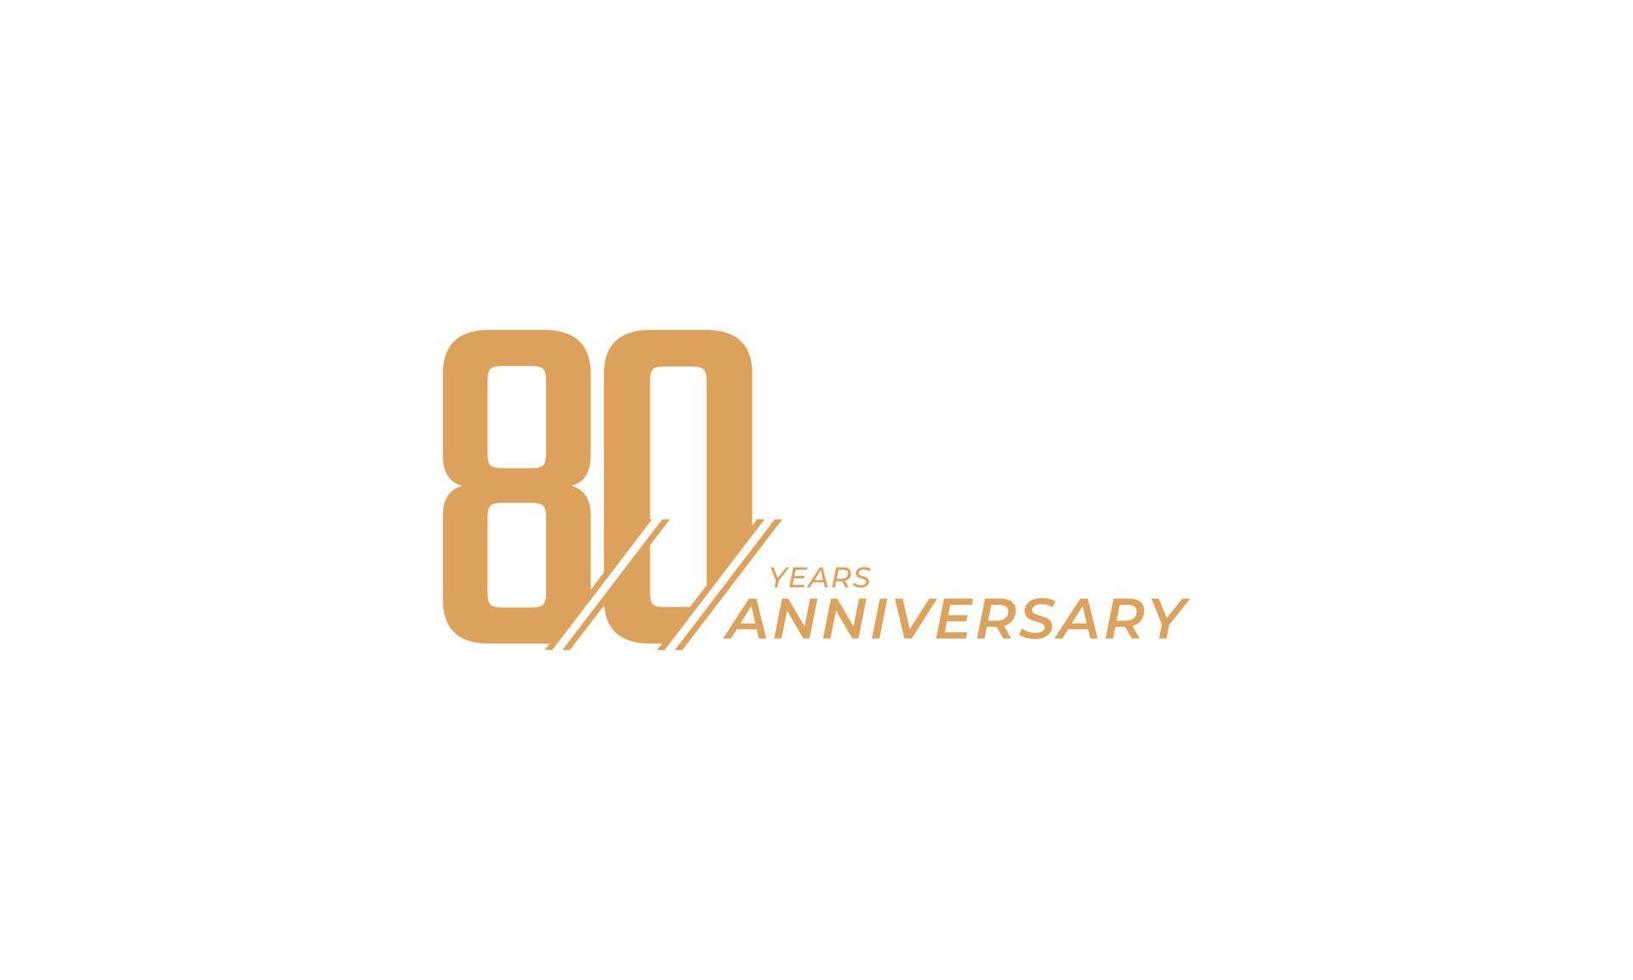 80 Year Anniversary Celebration Vector. Happy Anniversary Greeting Celebrates Template Design Illustration vector